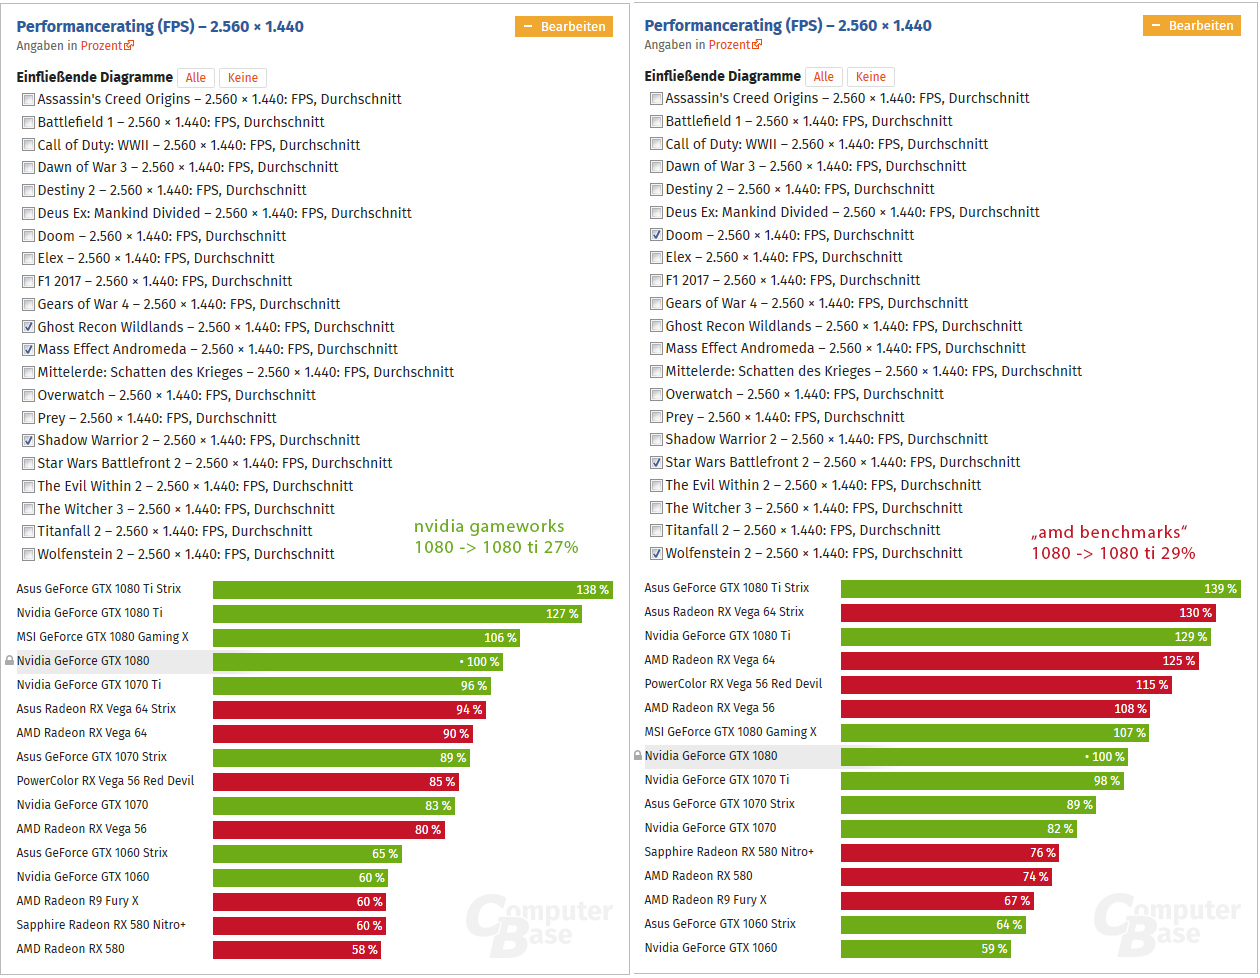 nvidia vs amd benchmarks.jpg